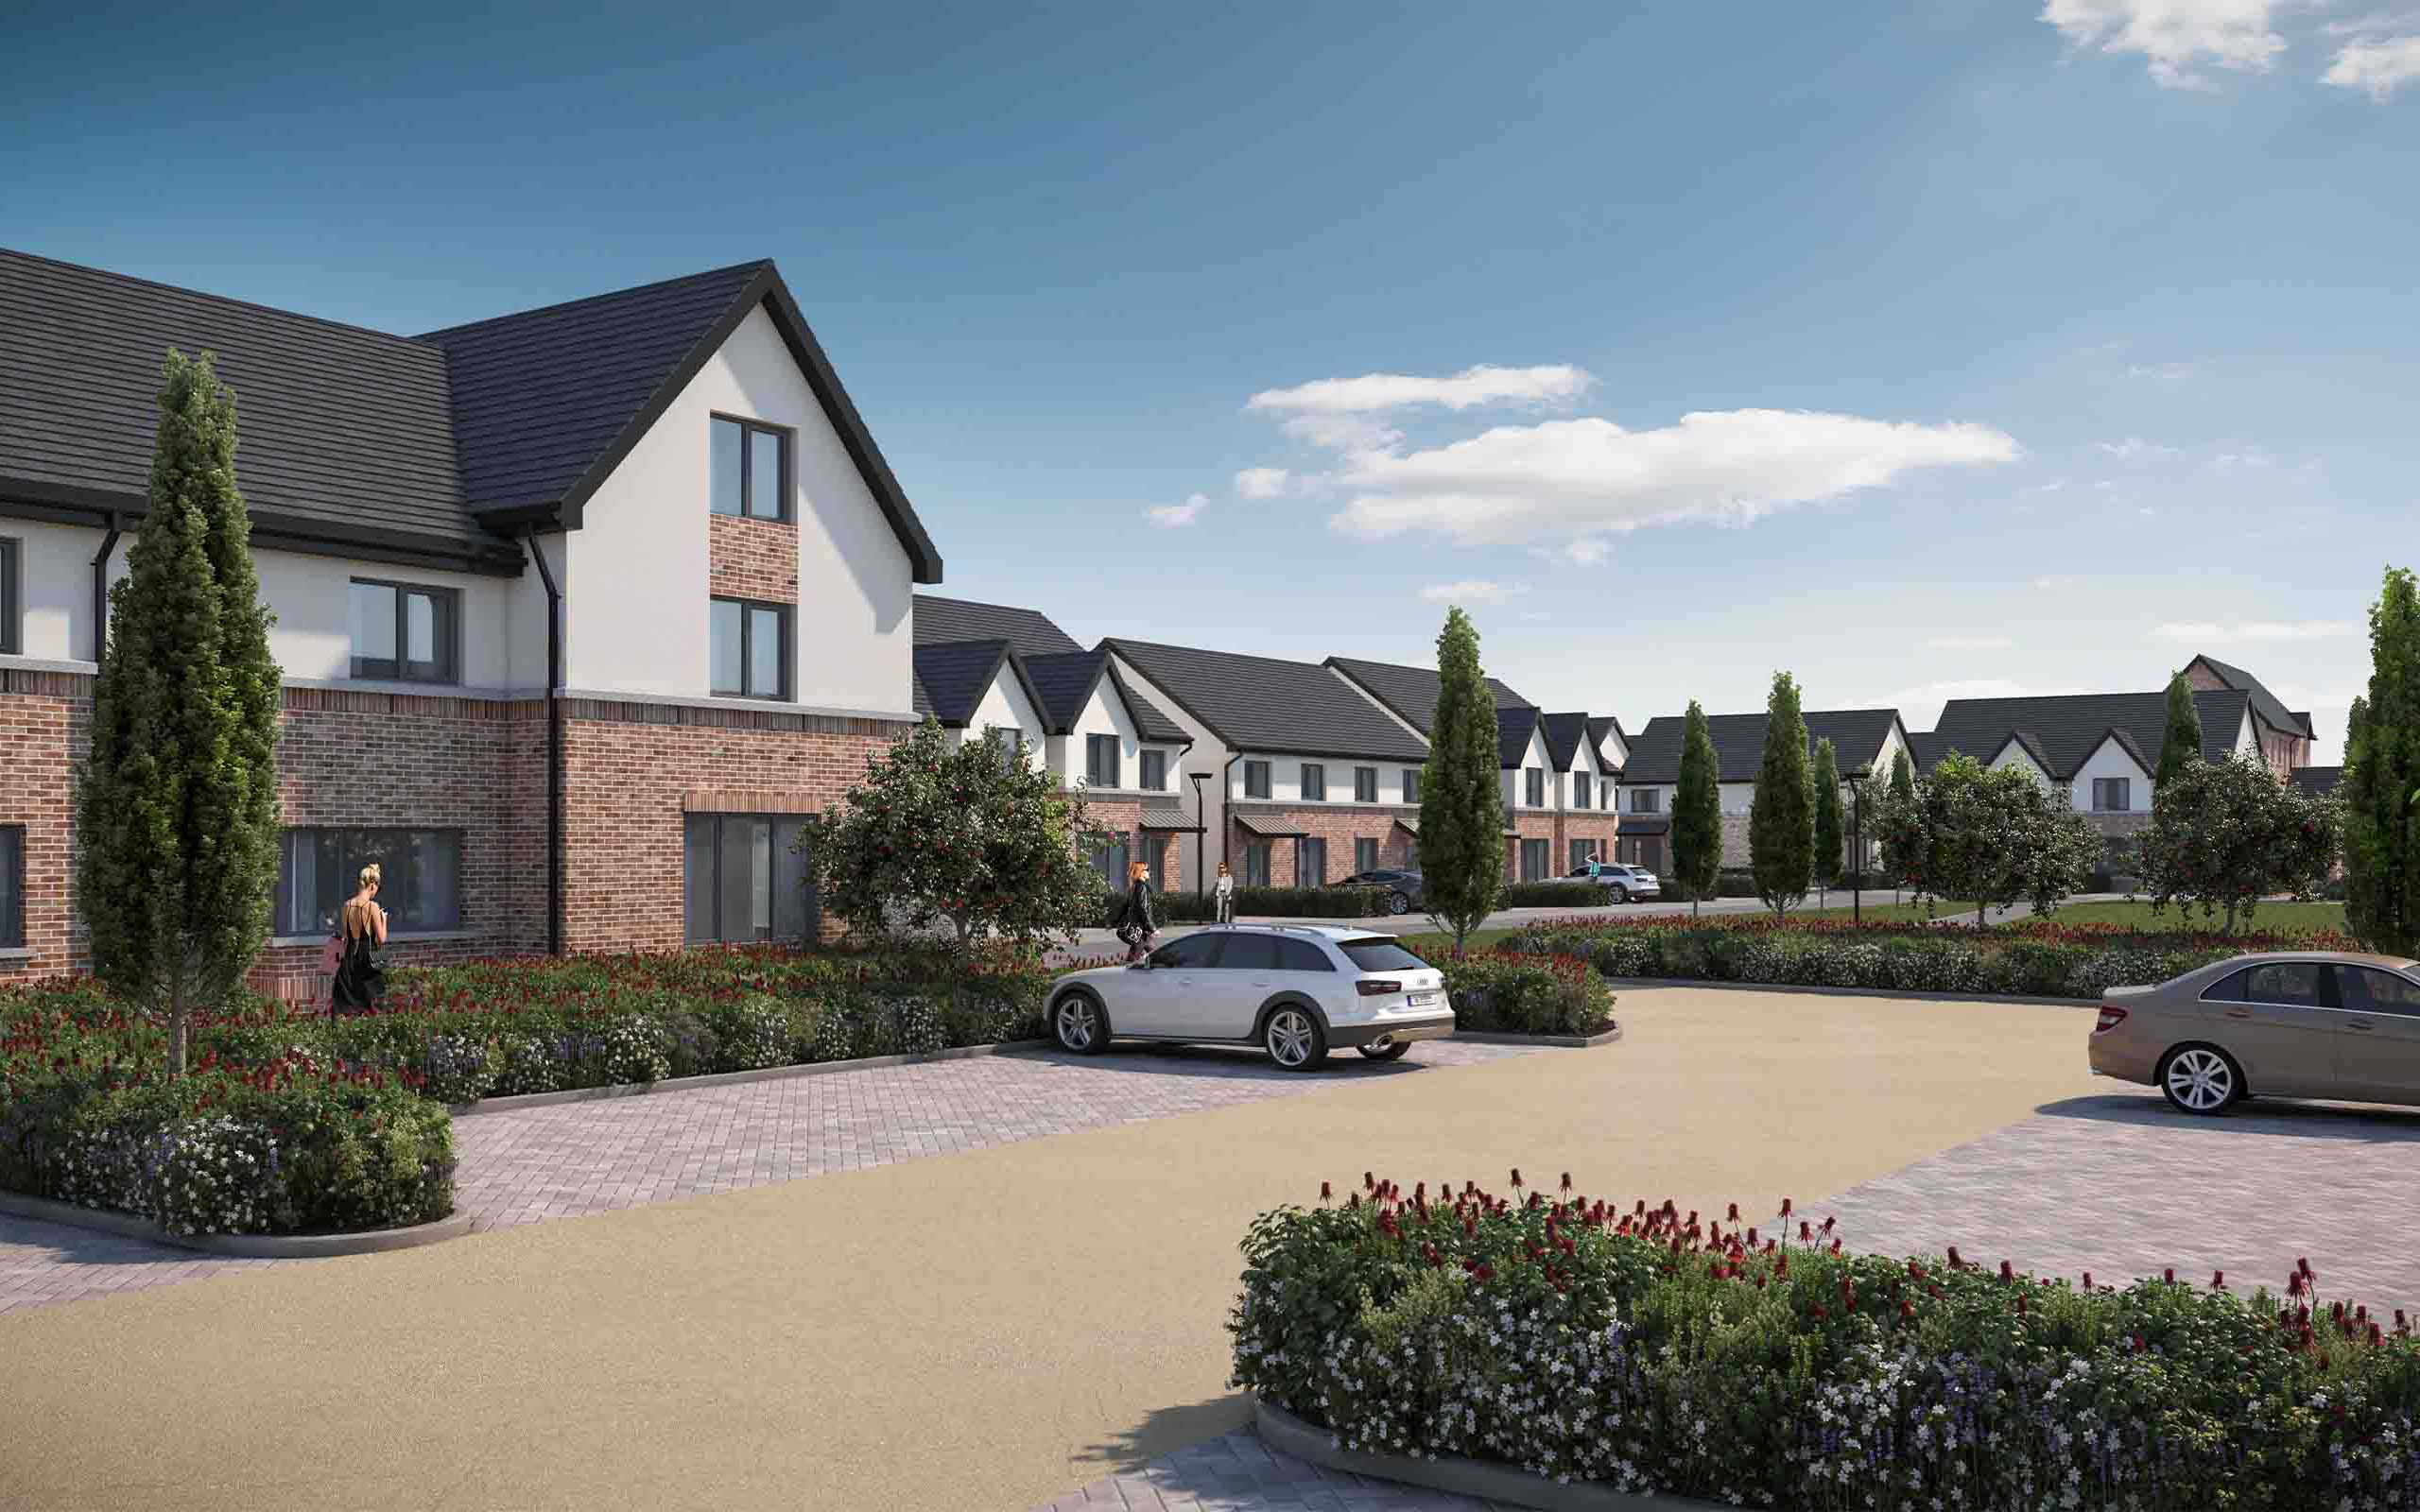 Architectural CGI of Ardrath Residential Development in Celbridge, Kildare by Ardstone Homes.